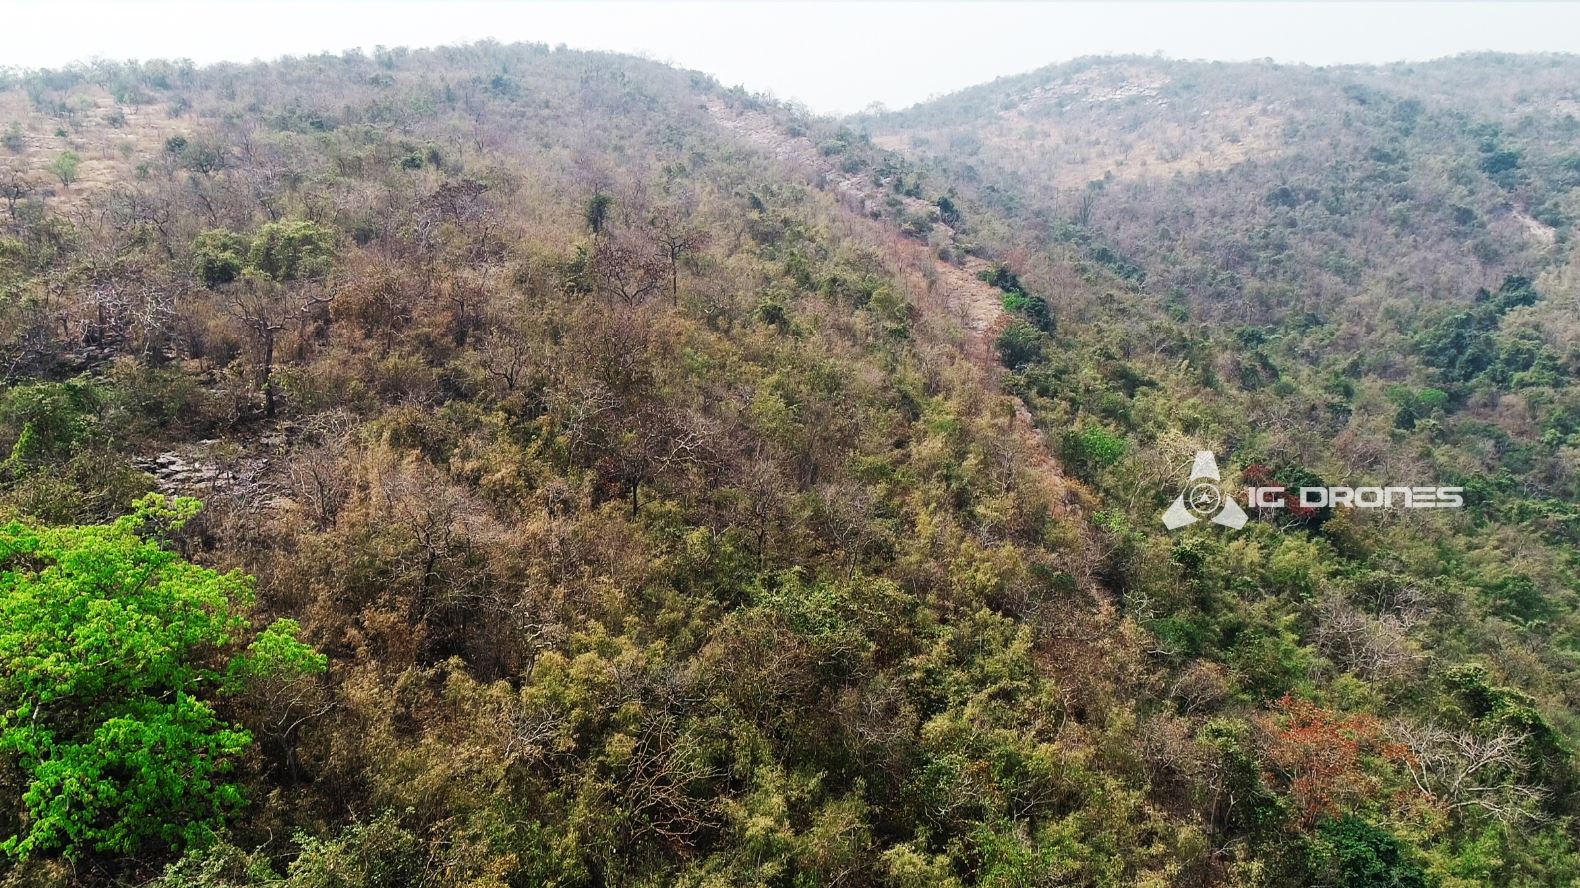 IG Drones Forest & Wildlife